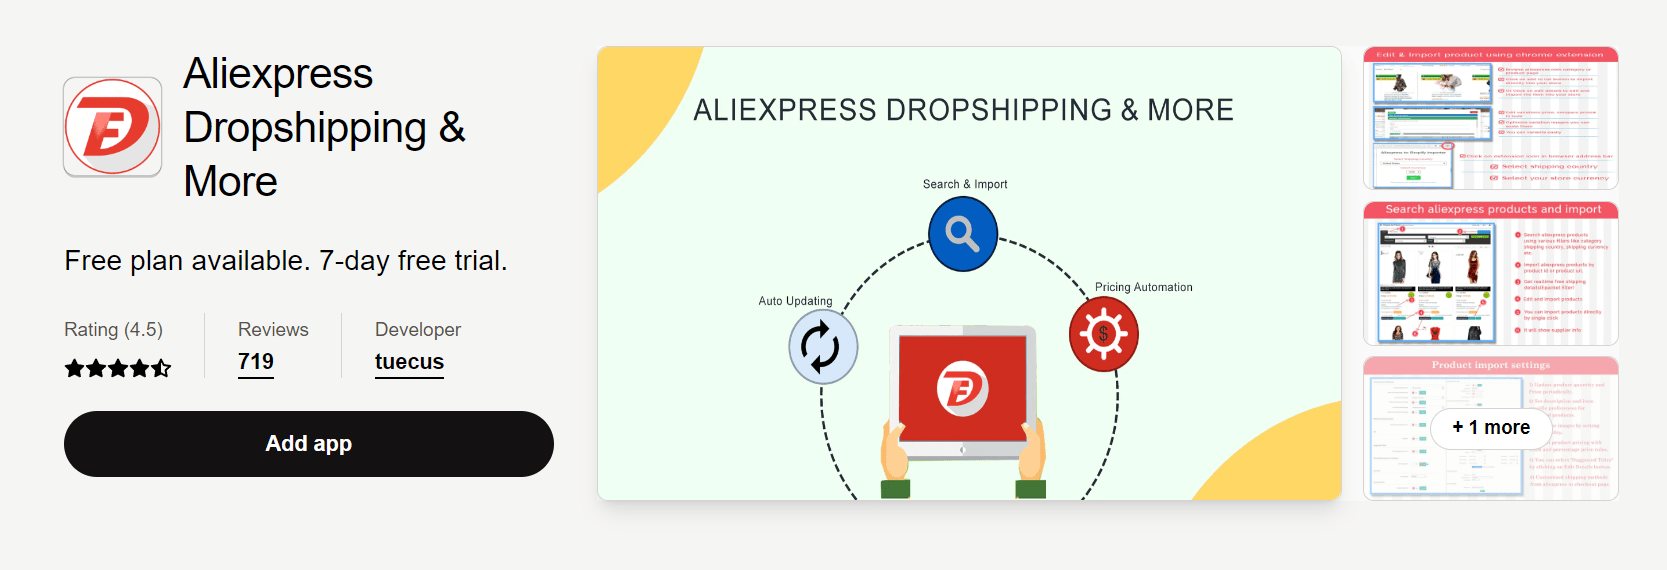 Aplikasi dropshipping Aliexpress